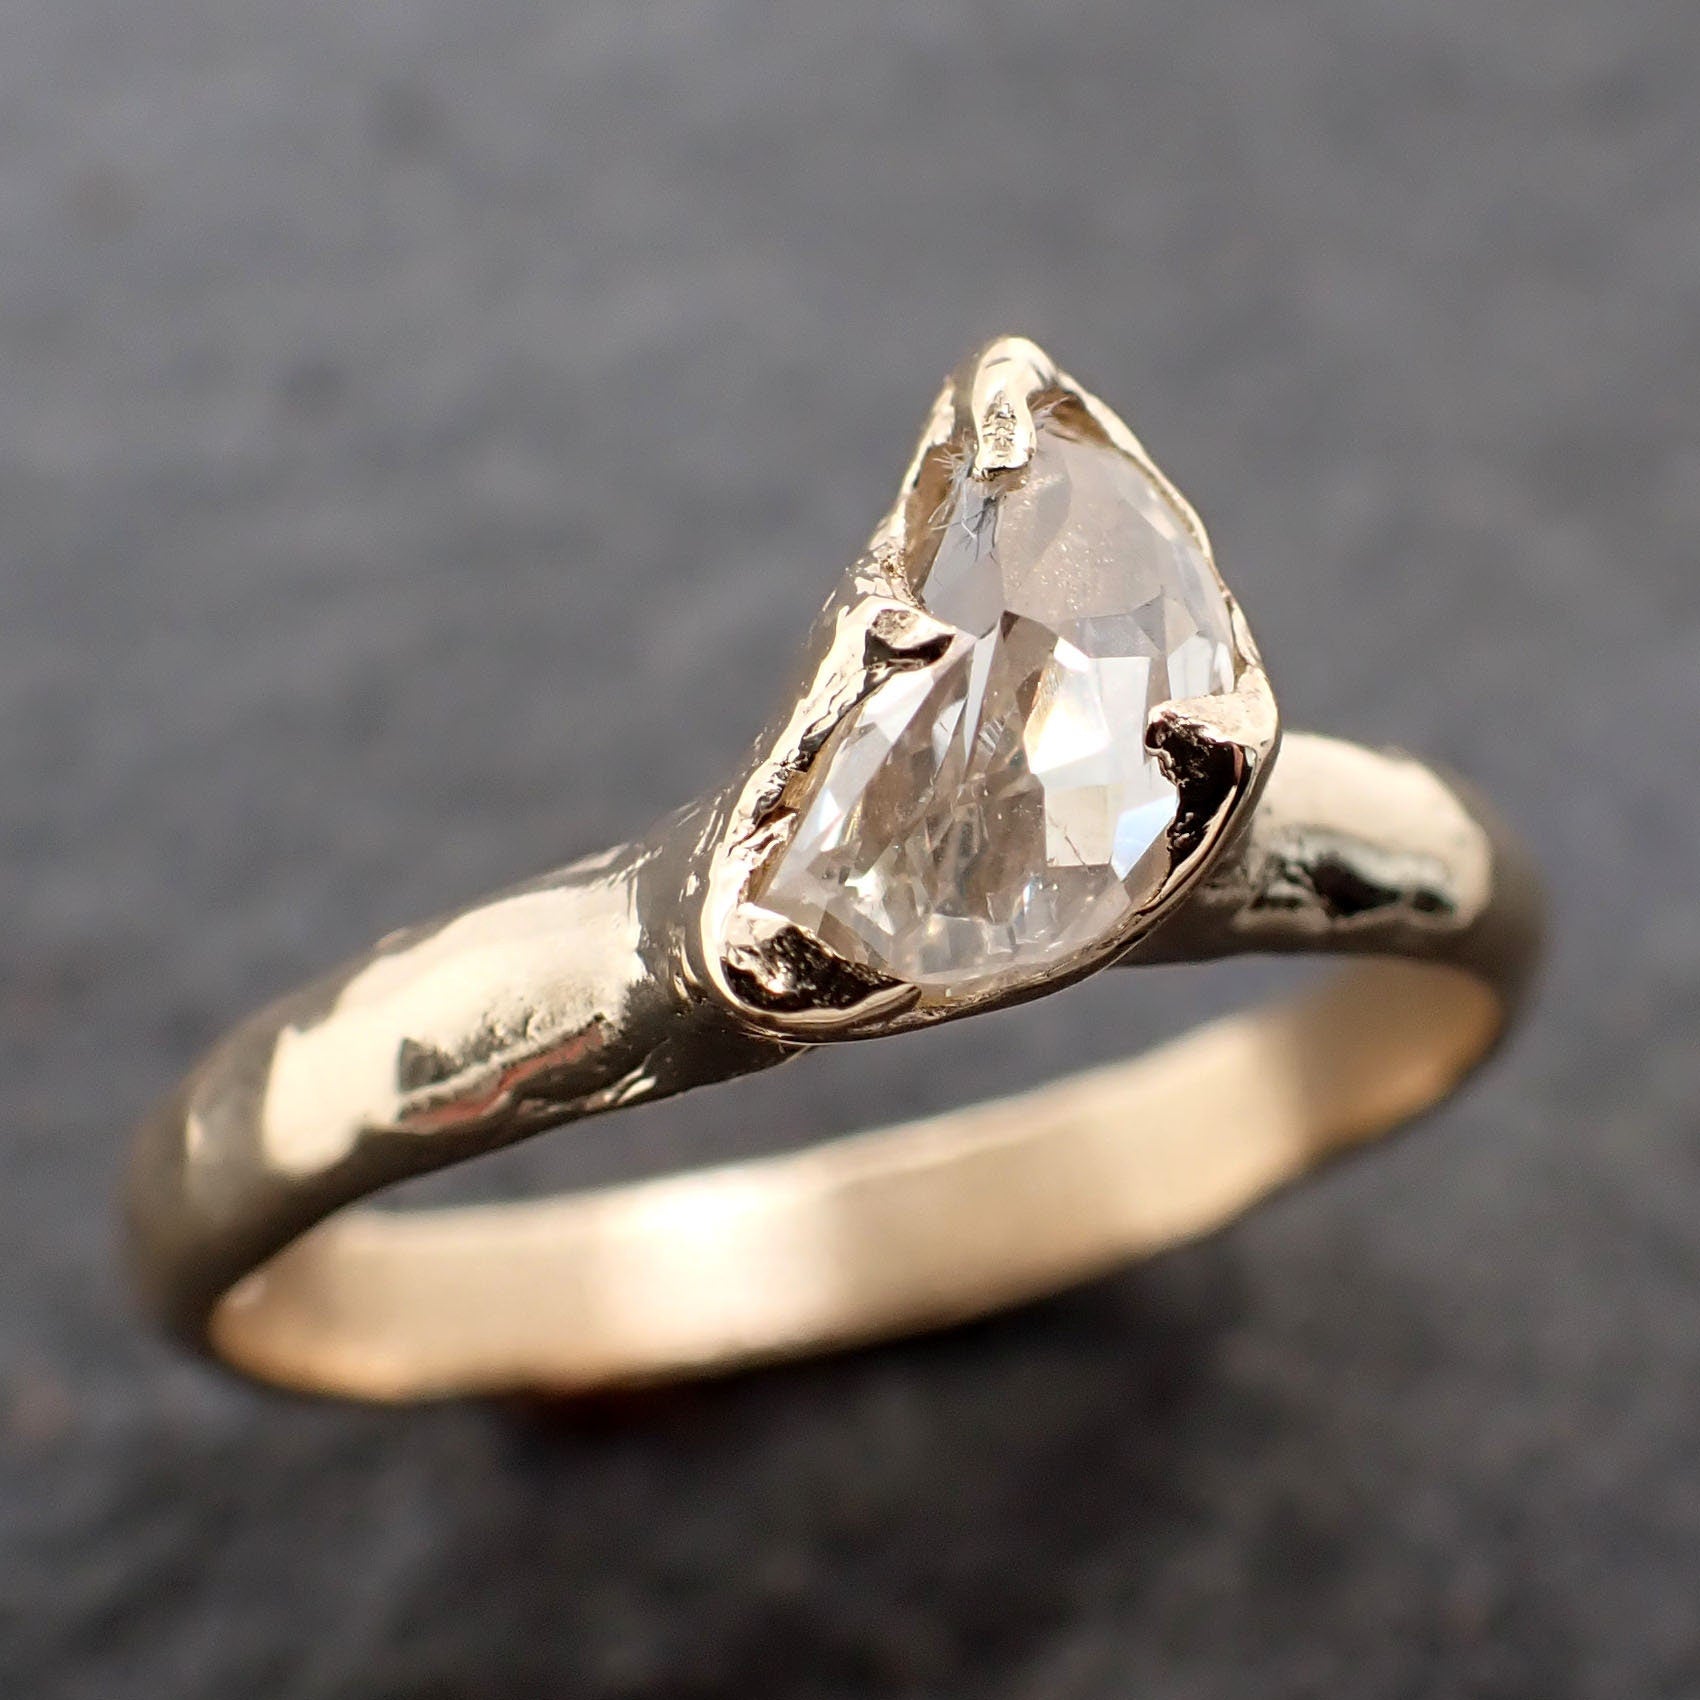 Fancy Cut Half Moon white Diamond Solitaire Engagement 14k Gold Wedding Ring byAngeline 3138